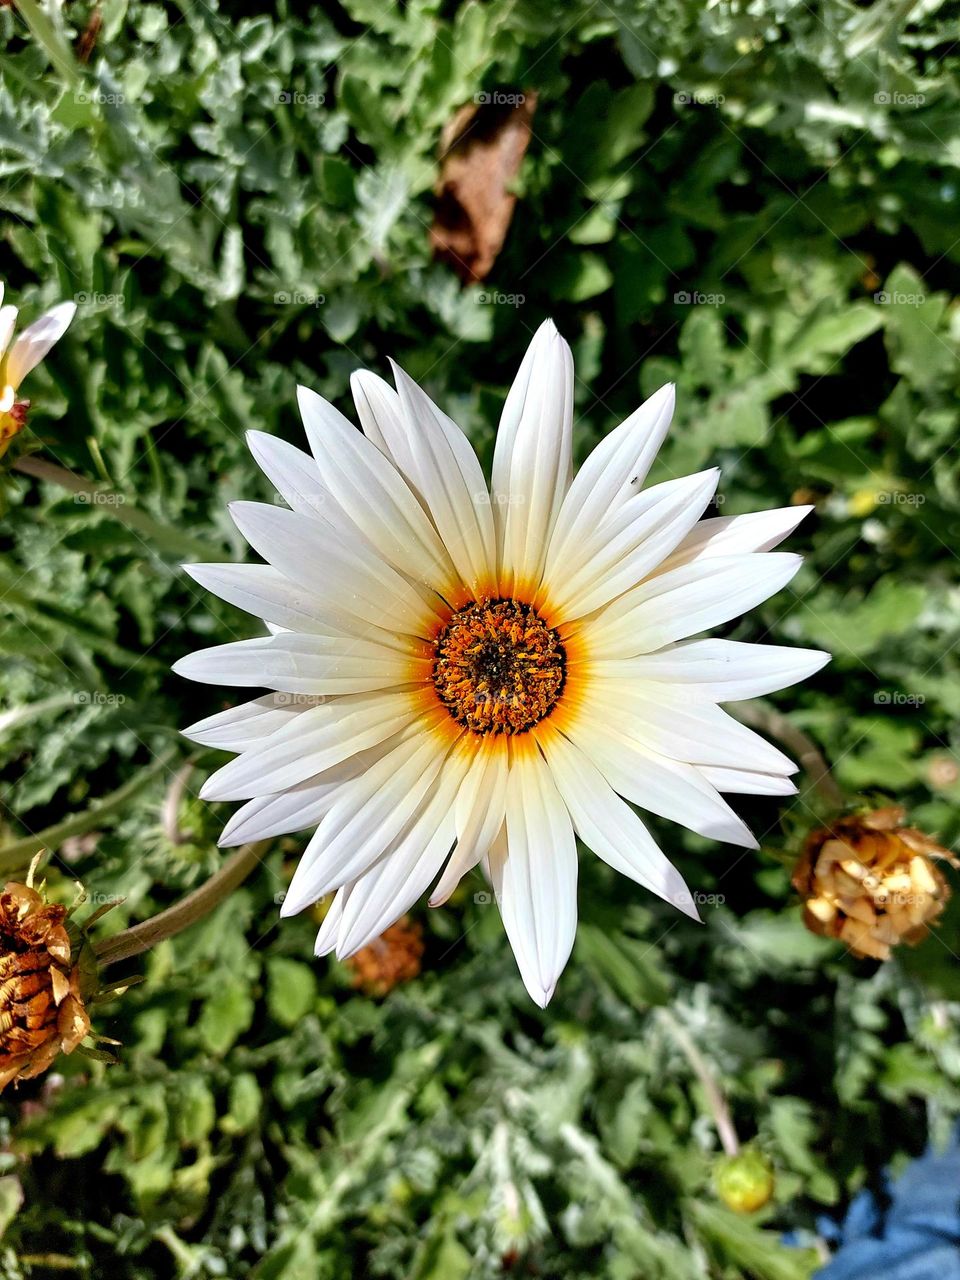 Arcrotis flower